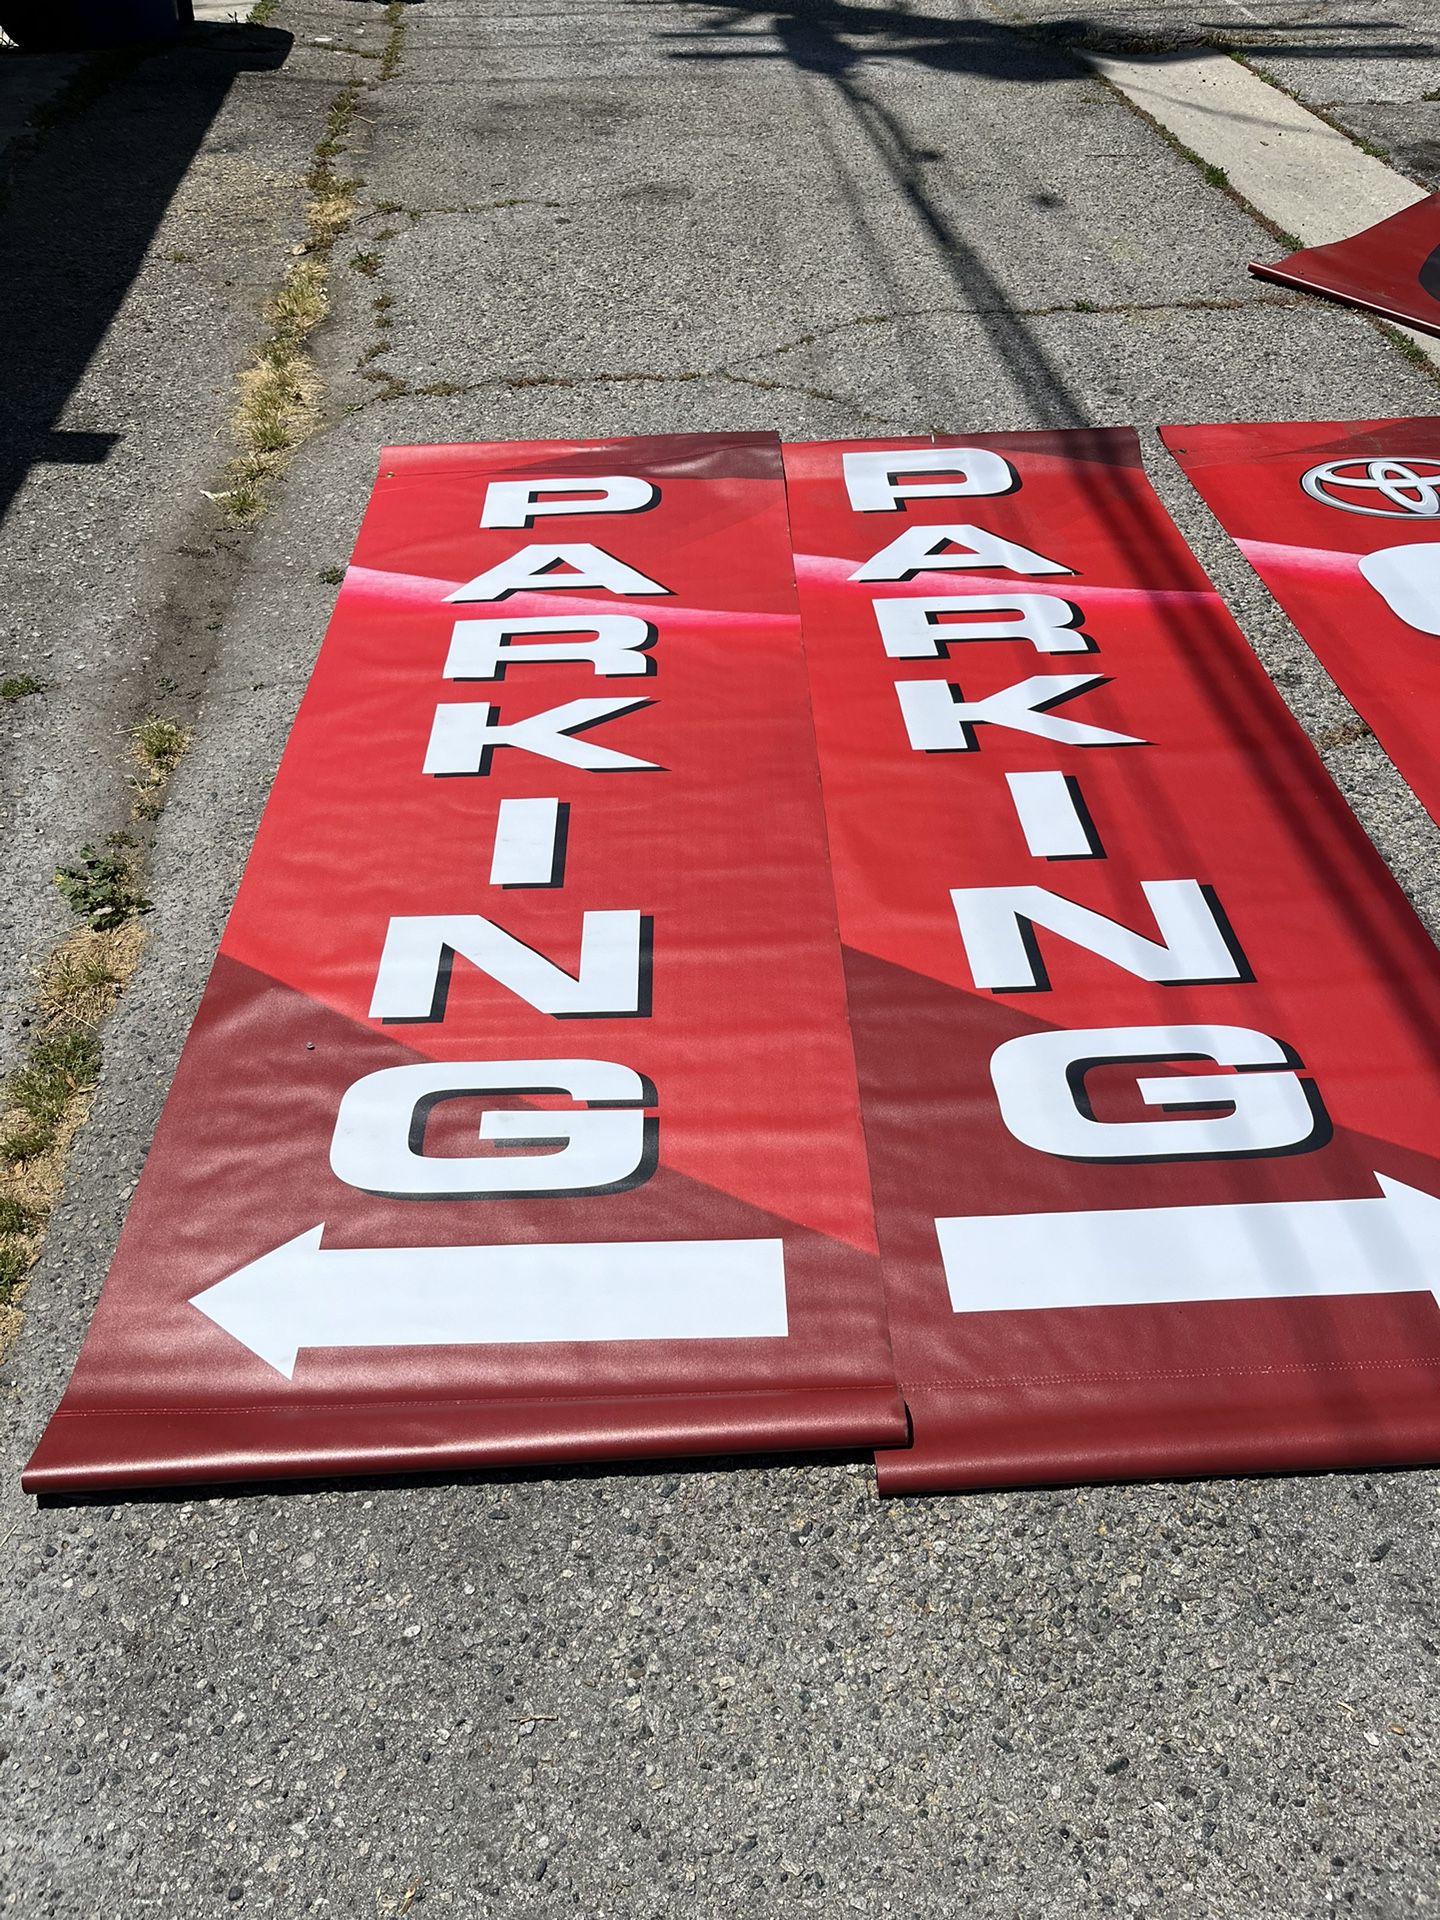 3’ x 7’ vinyl parking signage used car signage advertisements